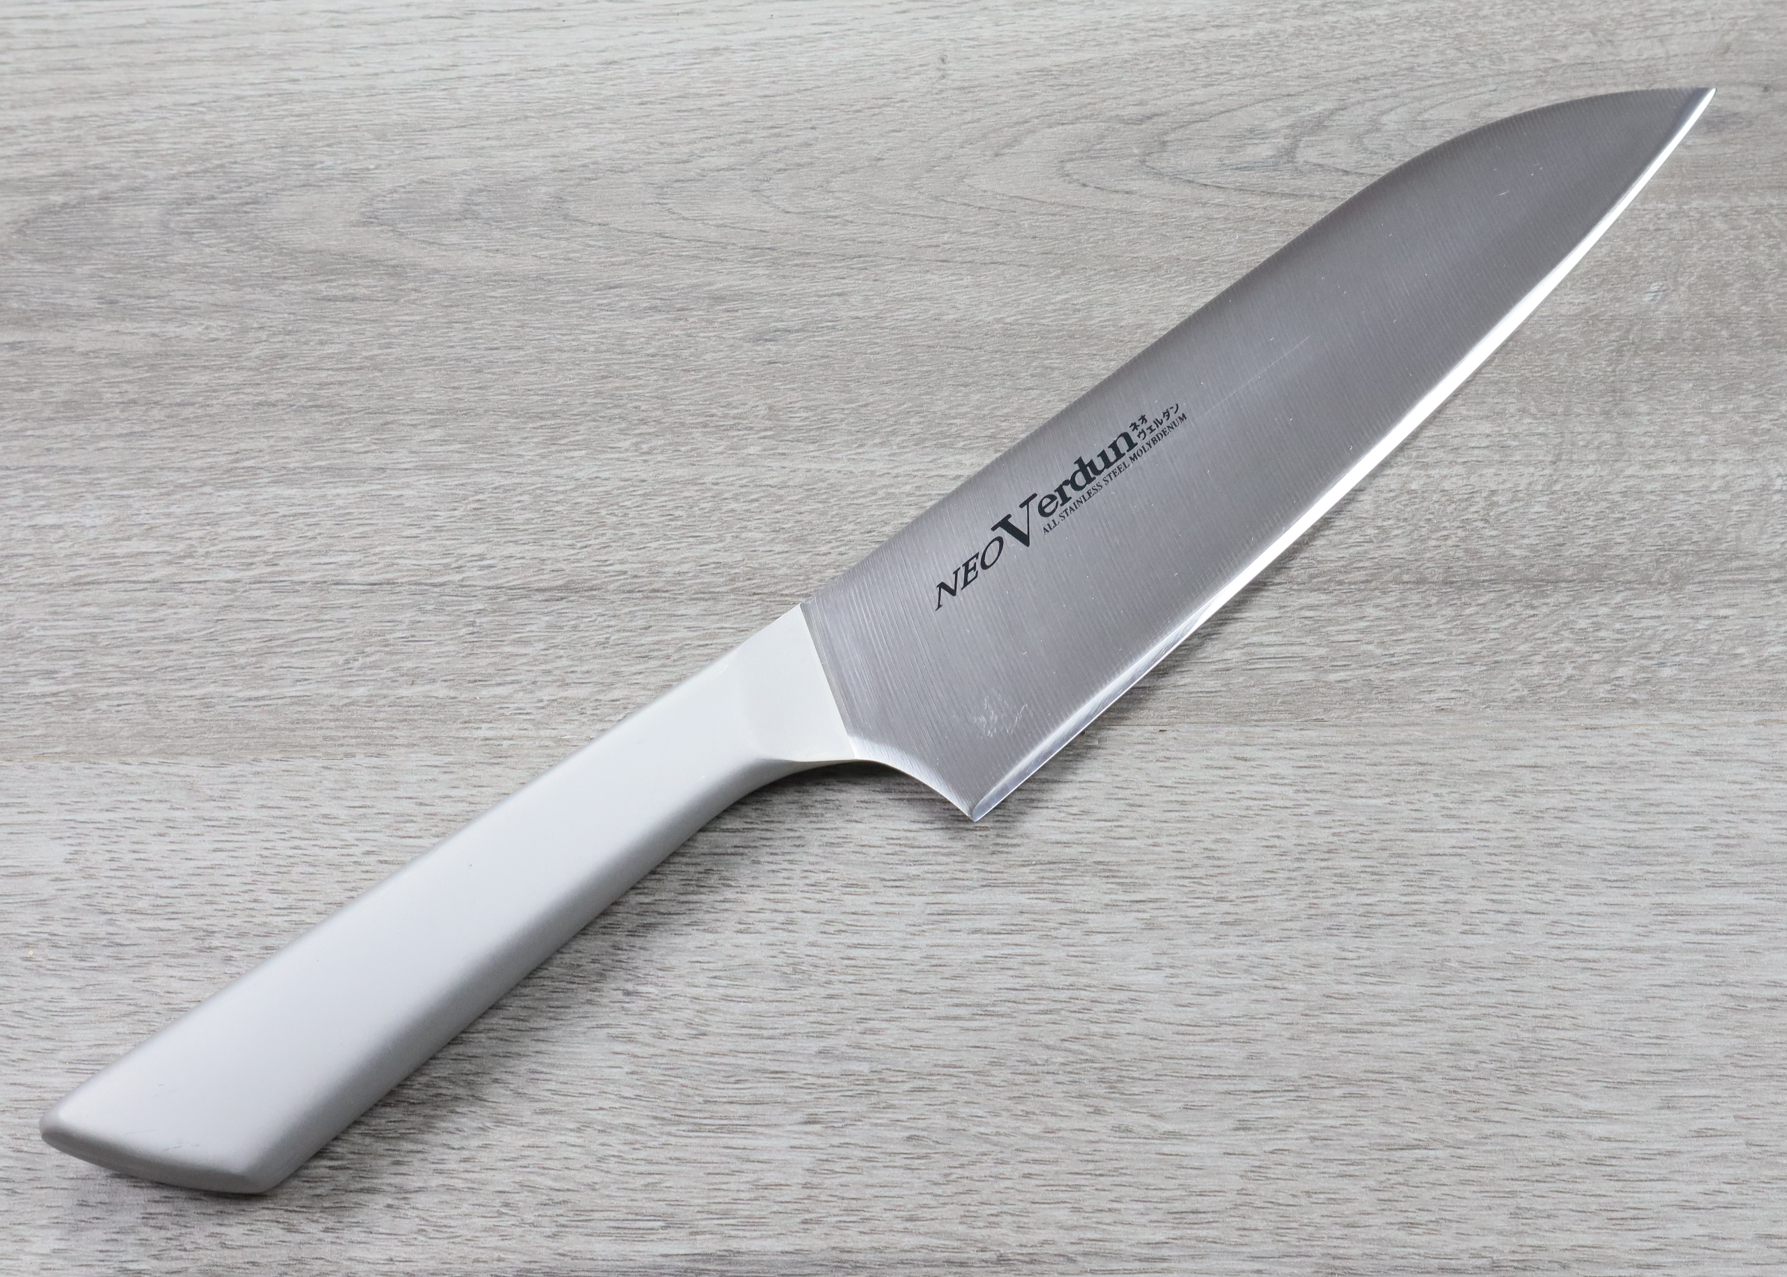 Neo Verdun Gyuto (Chef Knife) 180mm